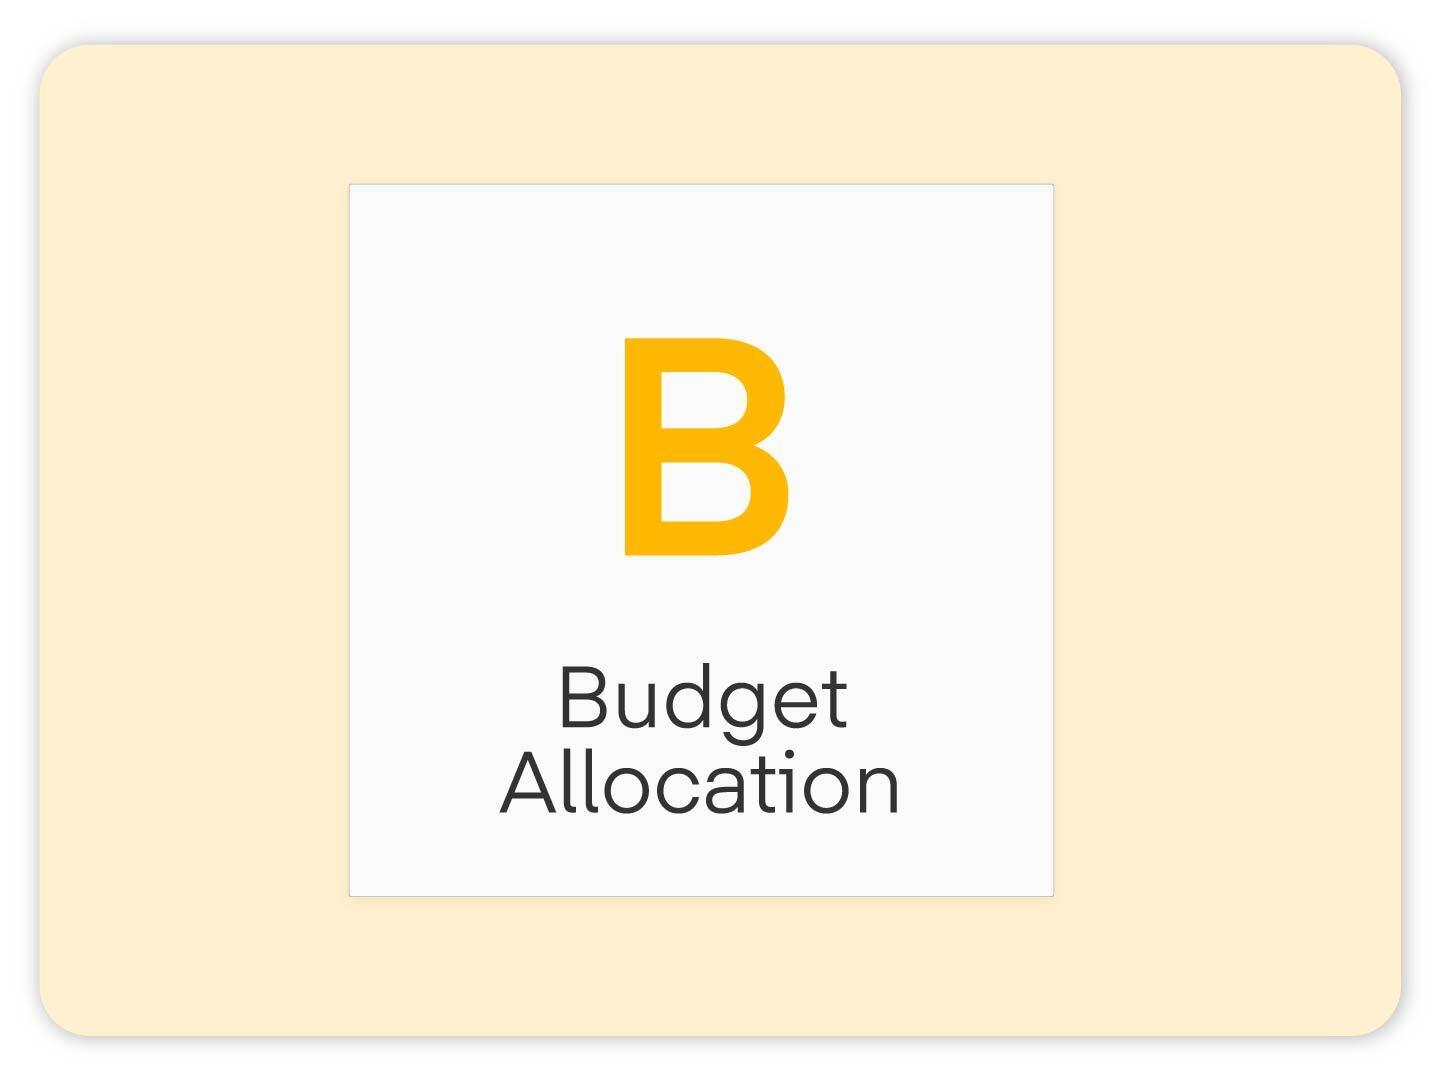 B - Budget Allocation